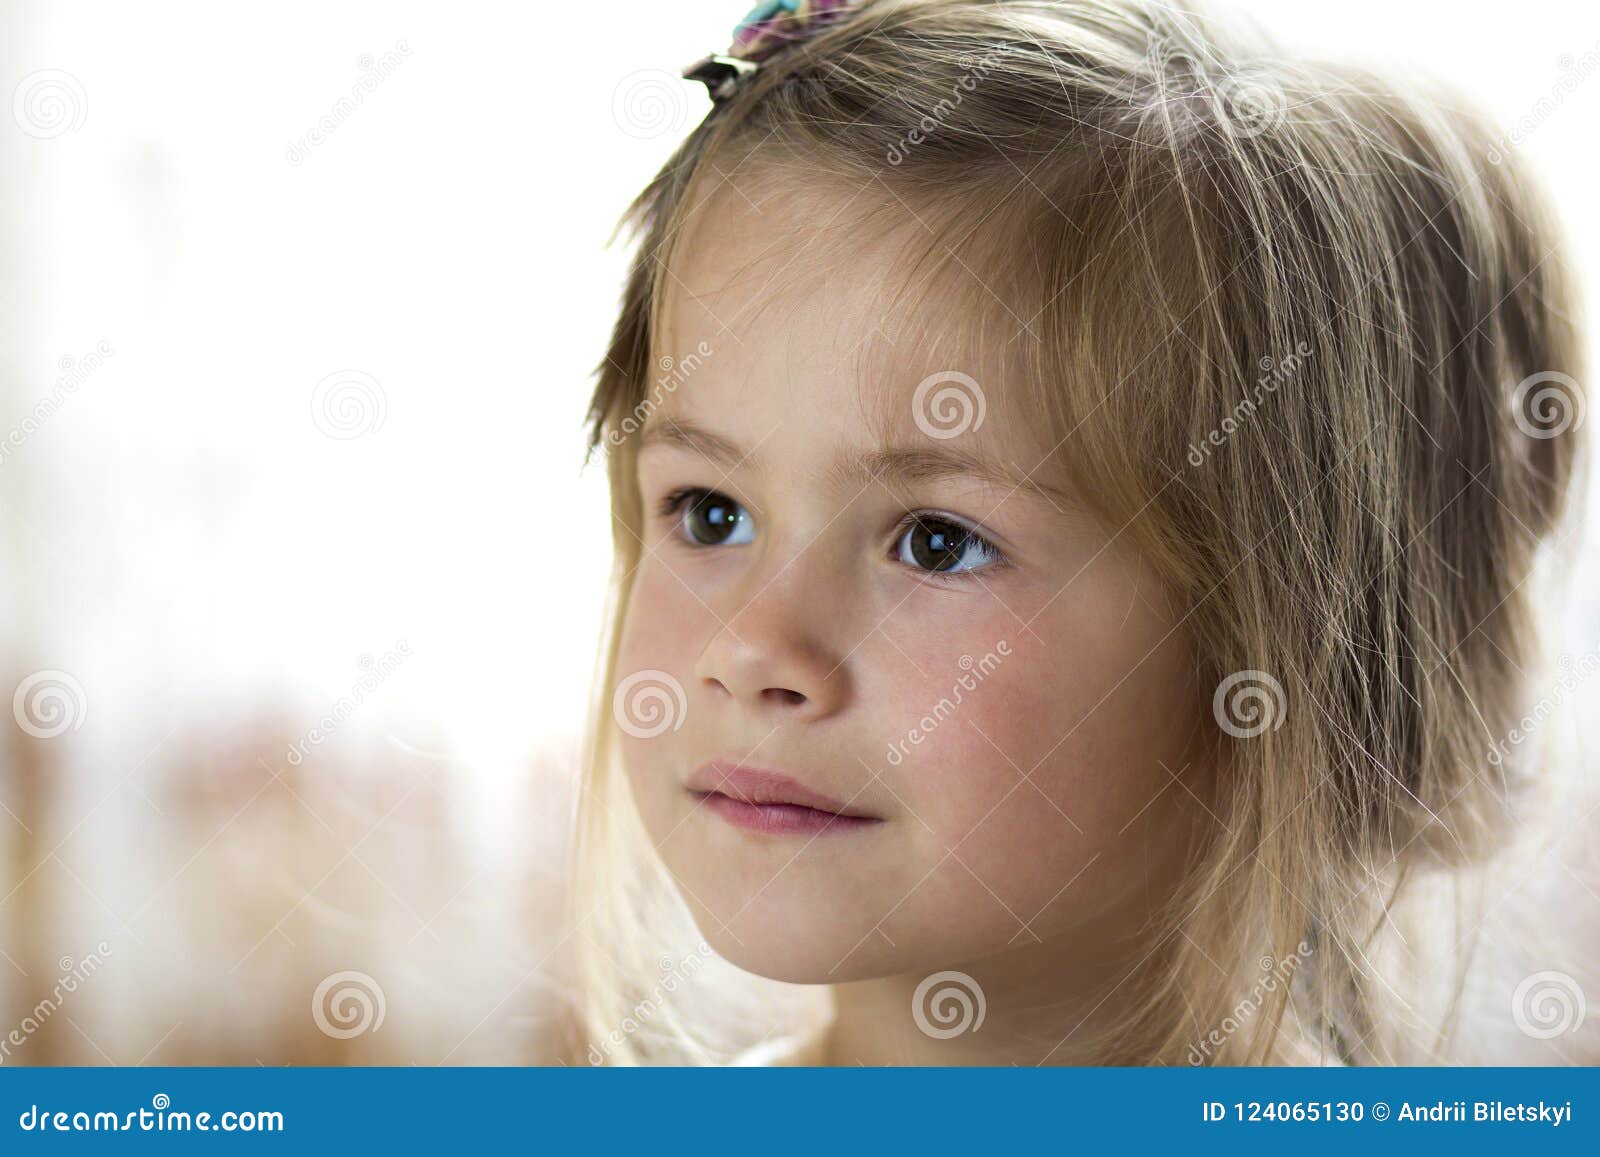 Brass Hair Clip on Little Girl's Hair · Free Stock Photo